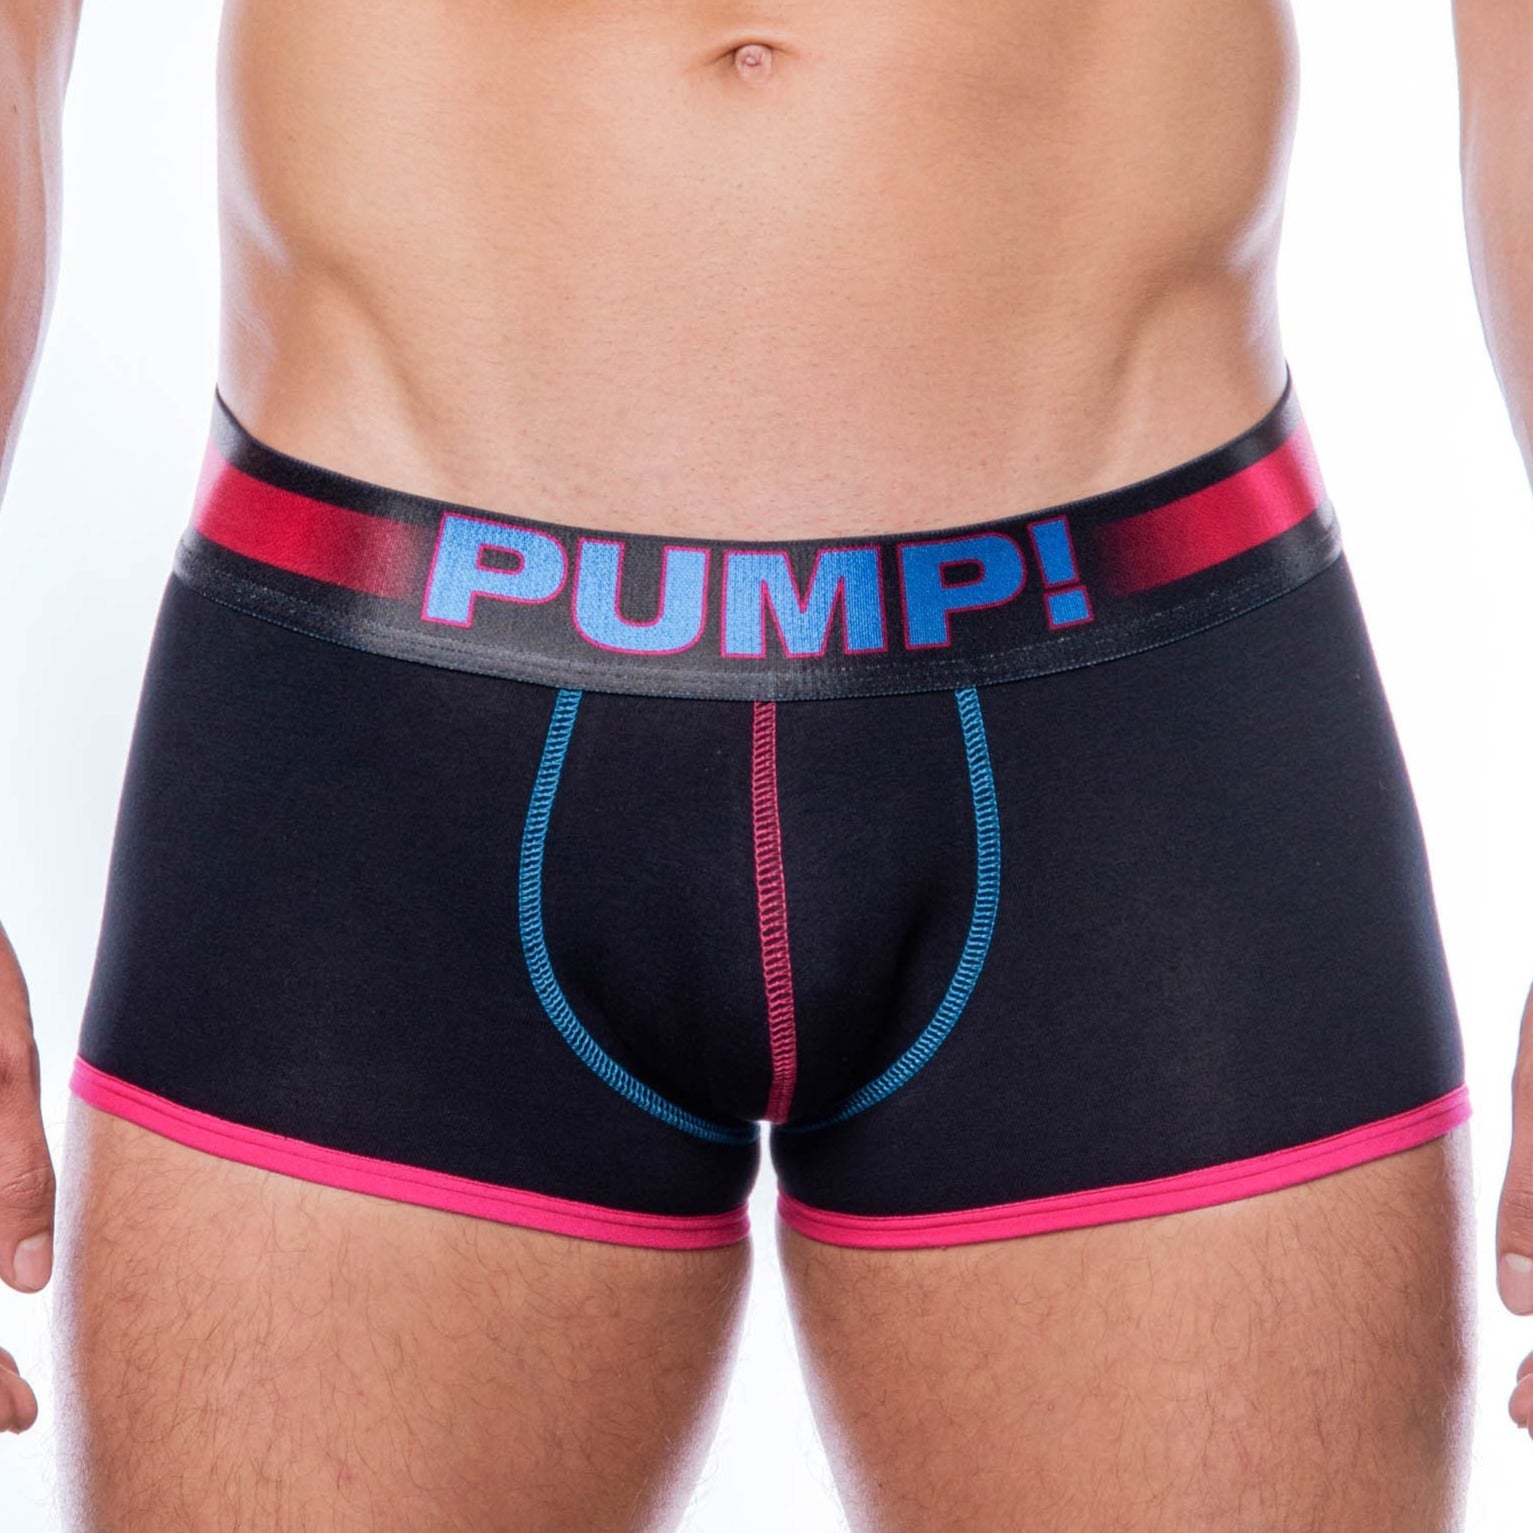 Play Boxer - Fuchsia Front by PUMP! Underwear at Trenderwear.com